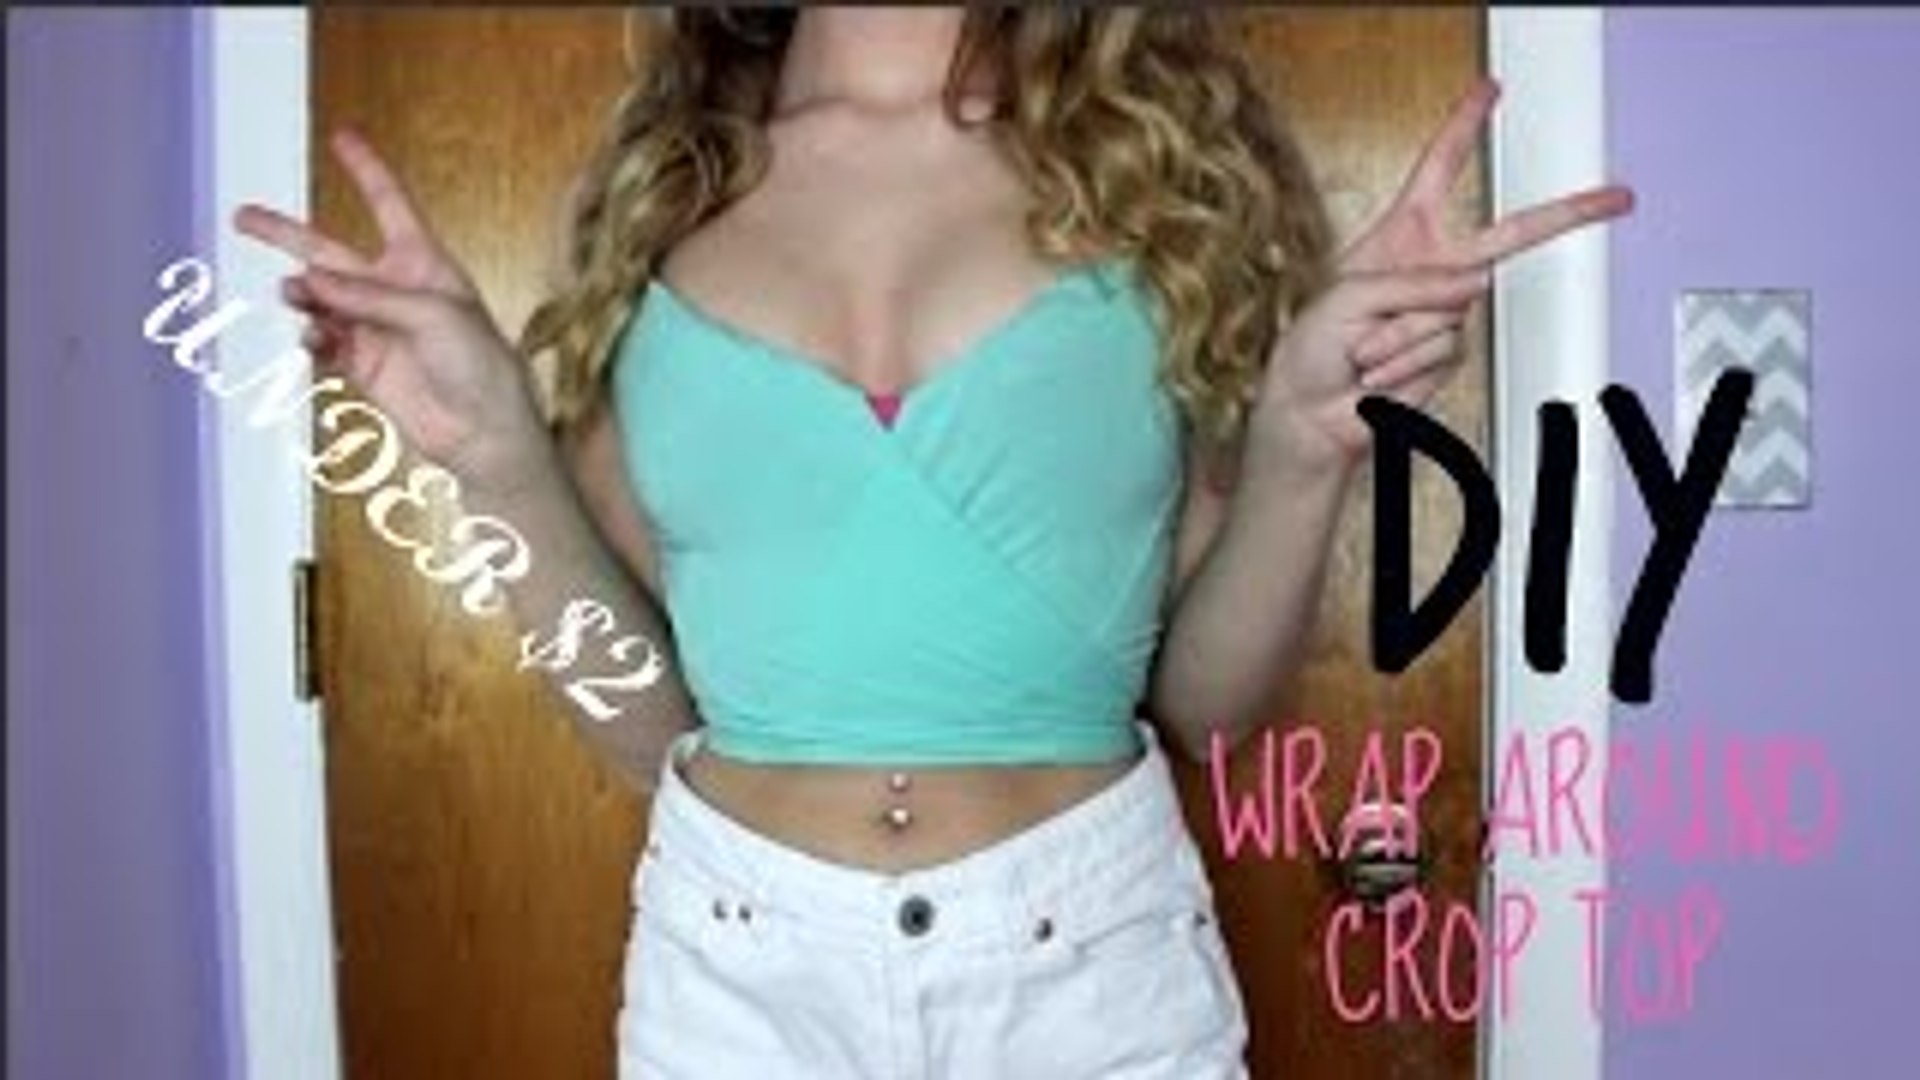 DIY WRAP AROUND CROP TOP FOR UNDER $2! (No Sew) - video dailymotion